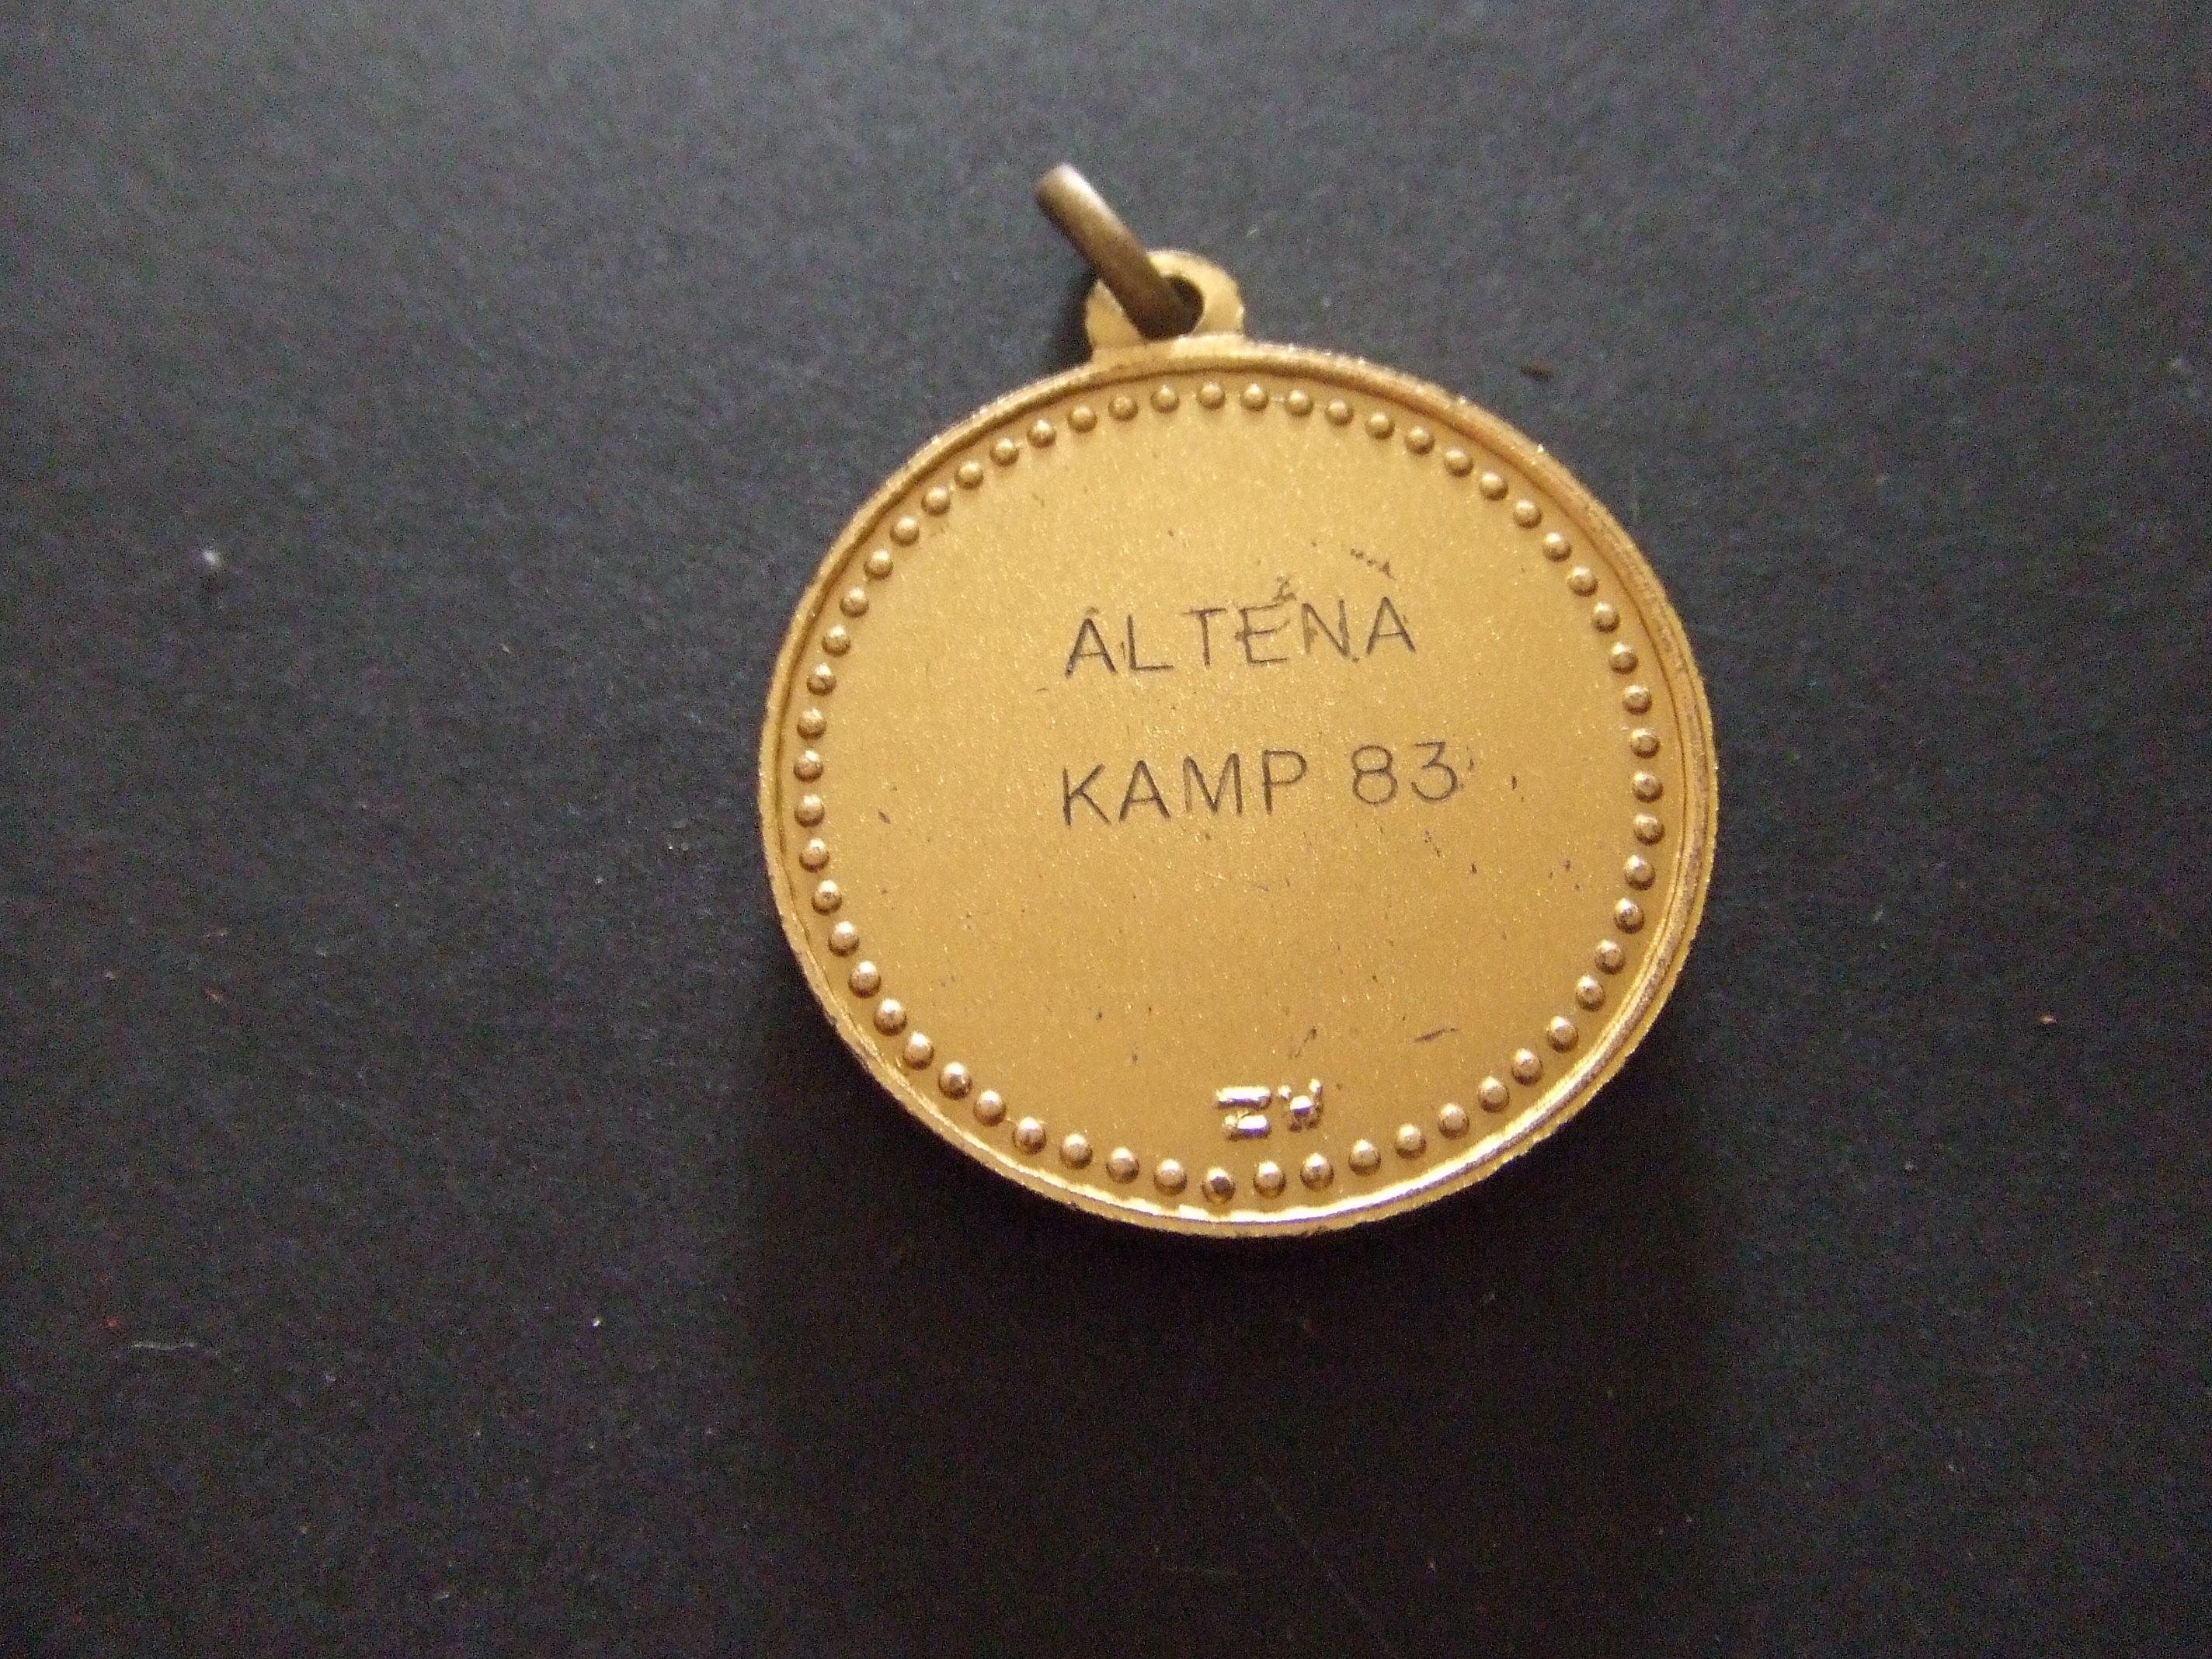 Zwemmen Altena kampioen 1983 (2)